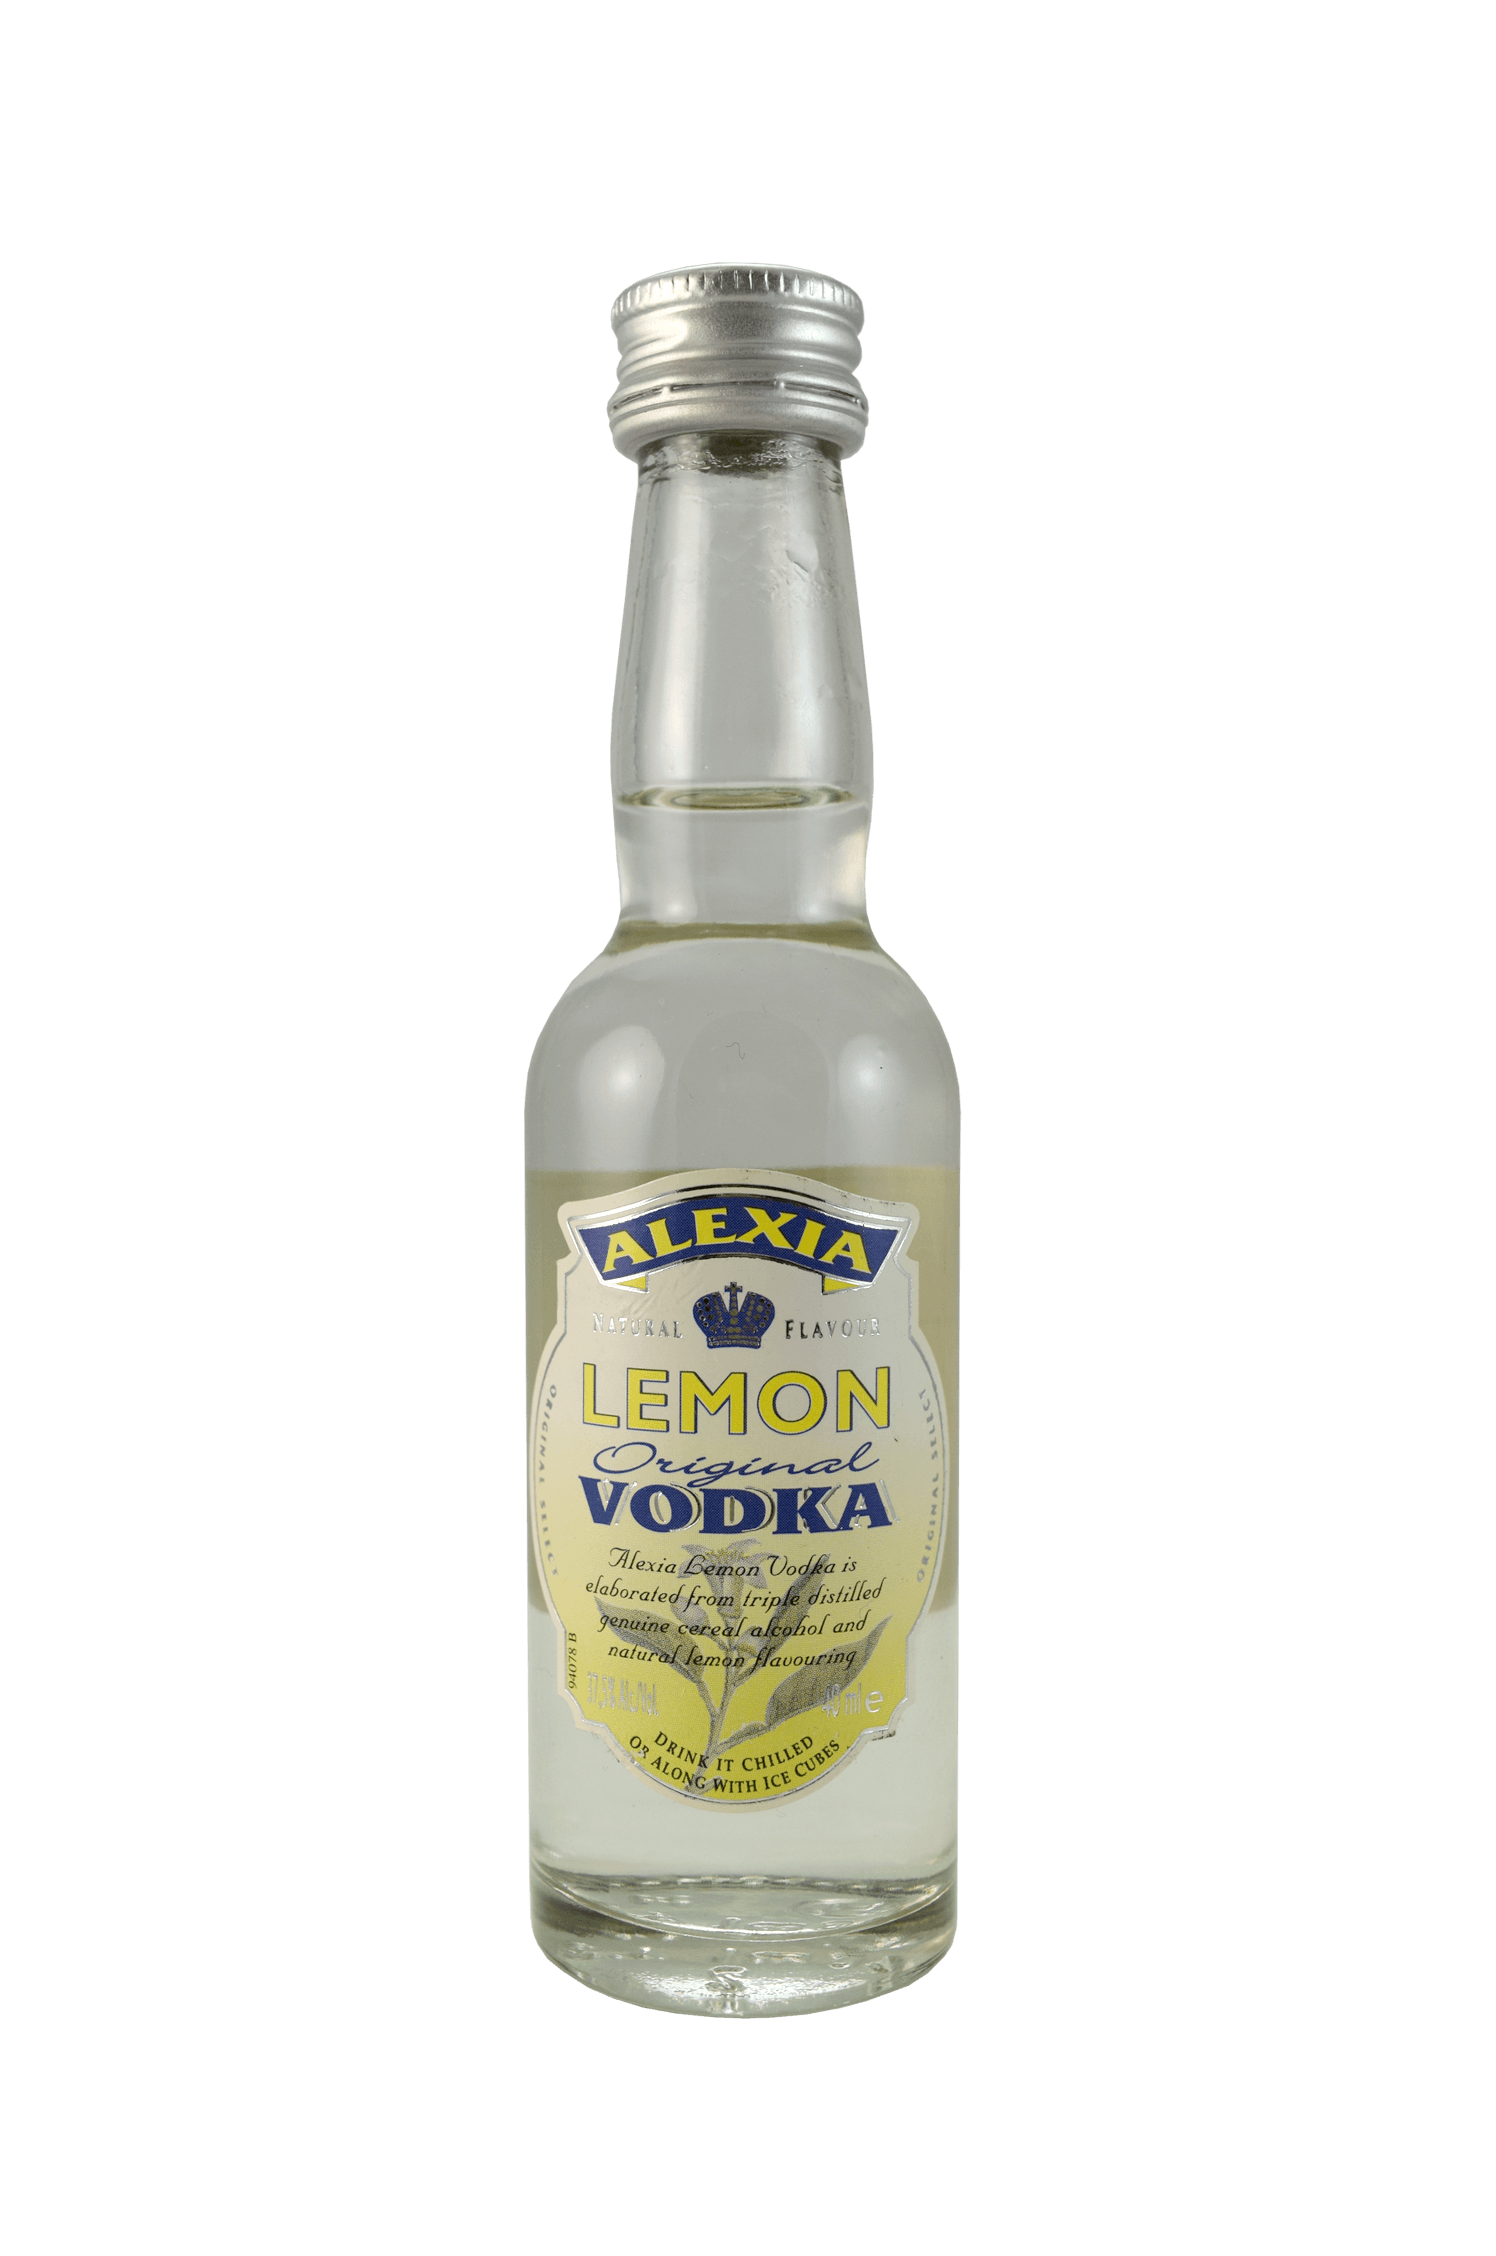 Alexia Lemon Original Vodka